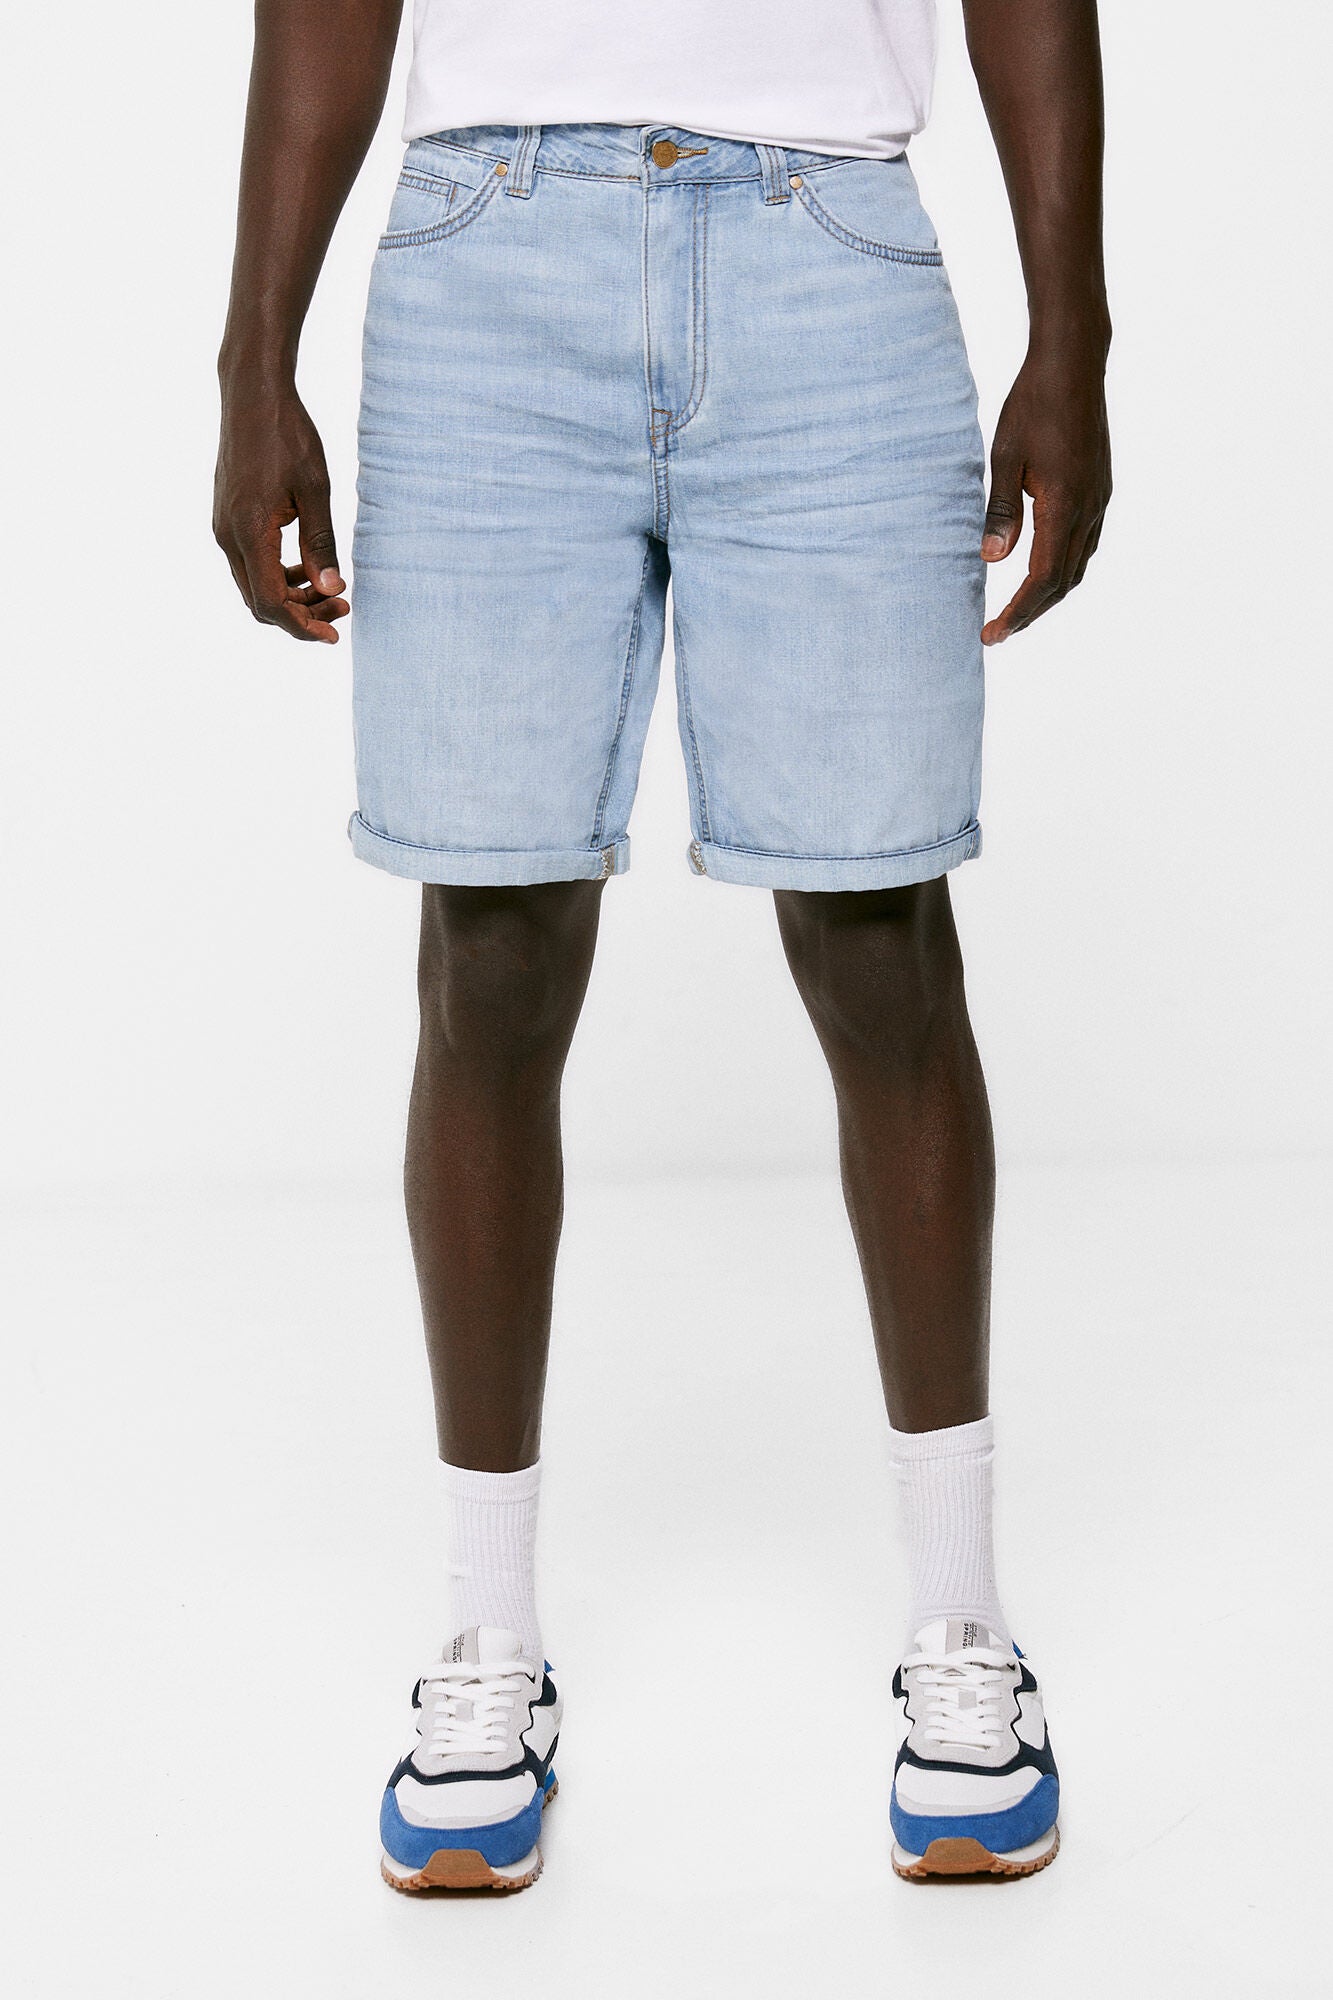 Regular fit dark wash ultra-lightweight denim Bermuda shorts